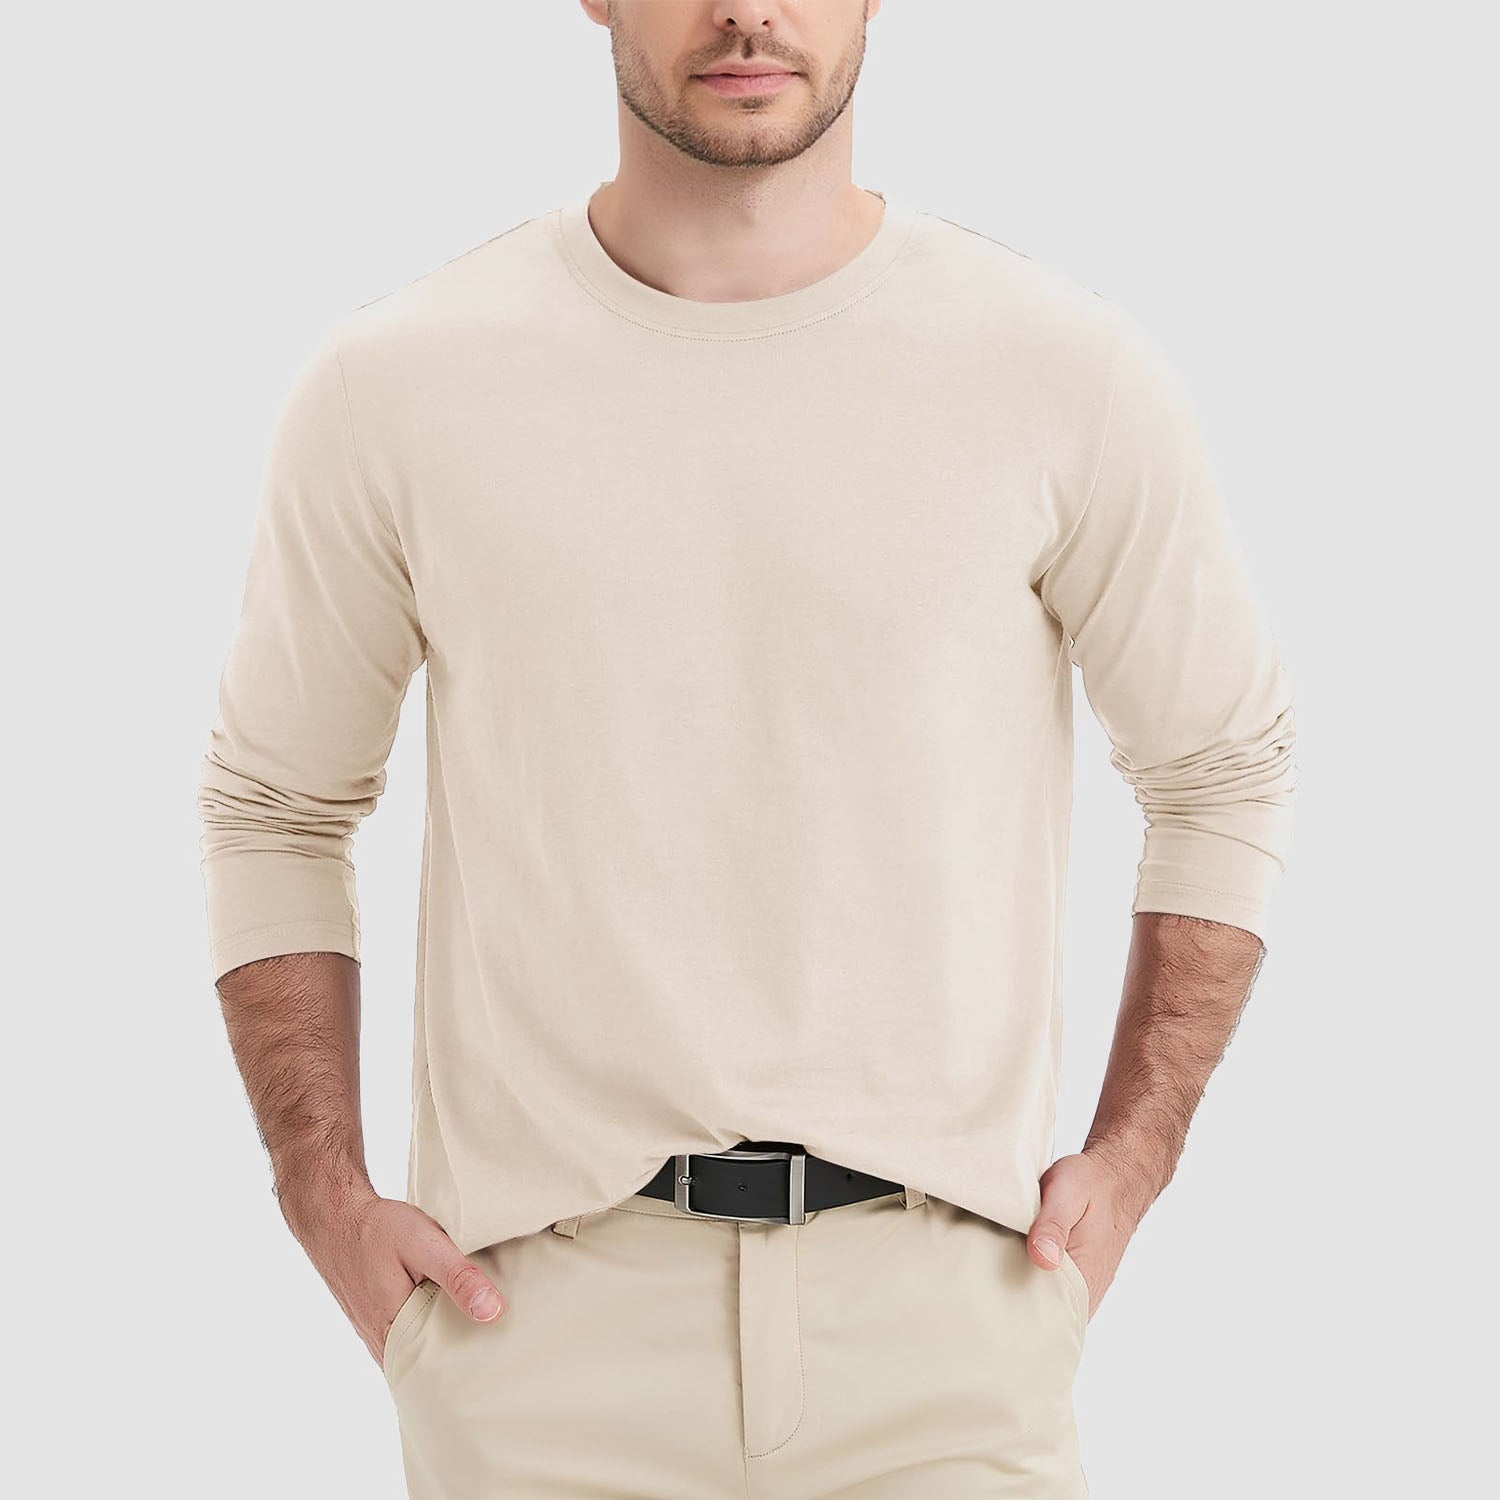 Men's Long Sleeve Shirts Cotton Crew Neck T Shirt Solid Casual Shirt Lightweight Work Tee Shirts